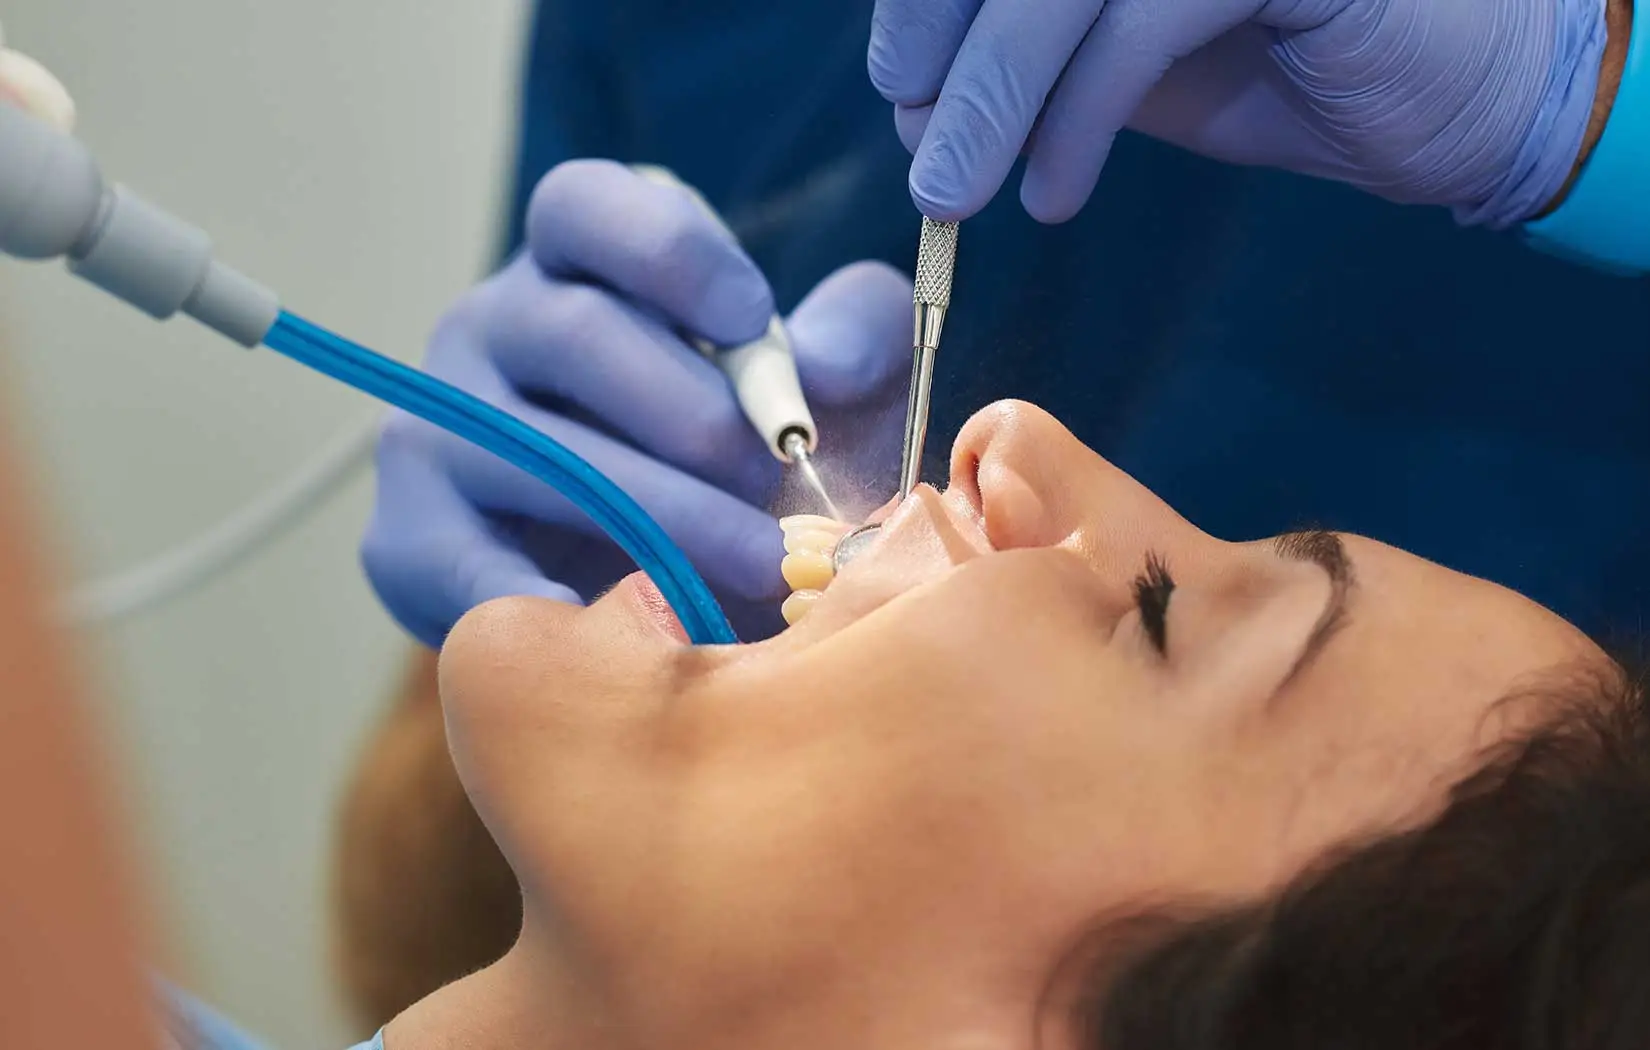 Periodontist checking patients gum health